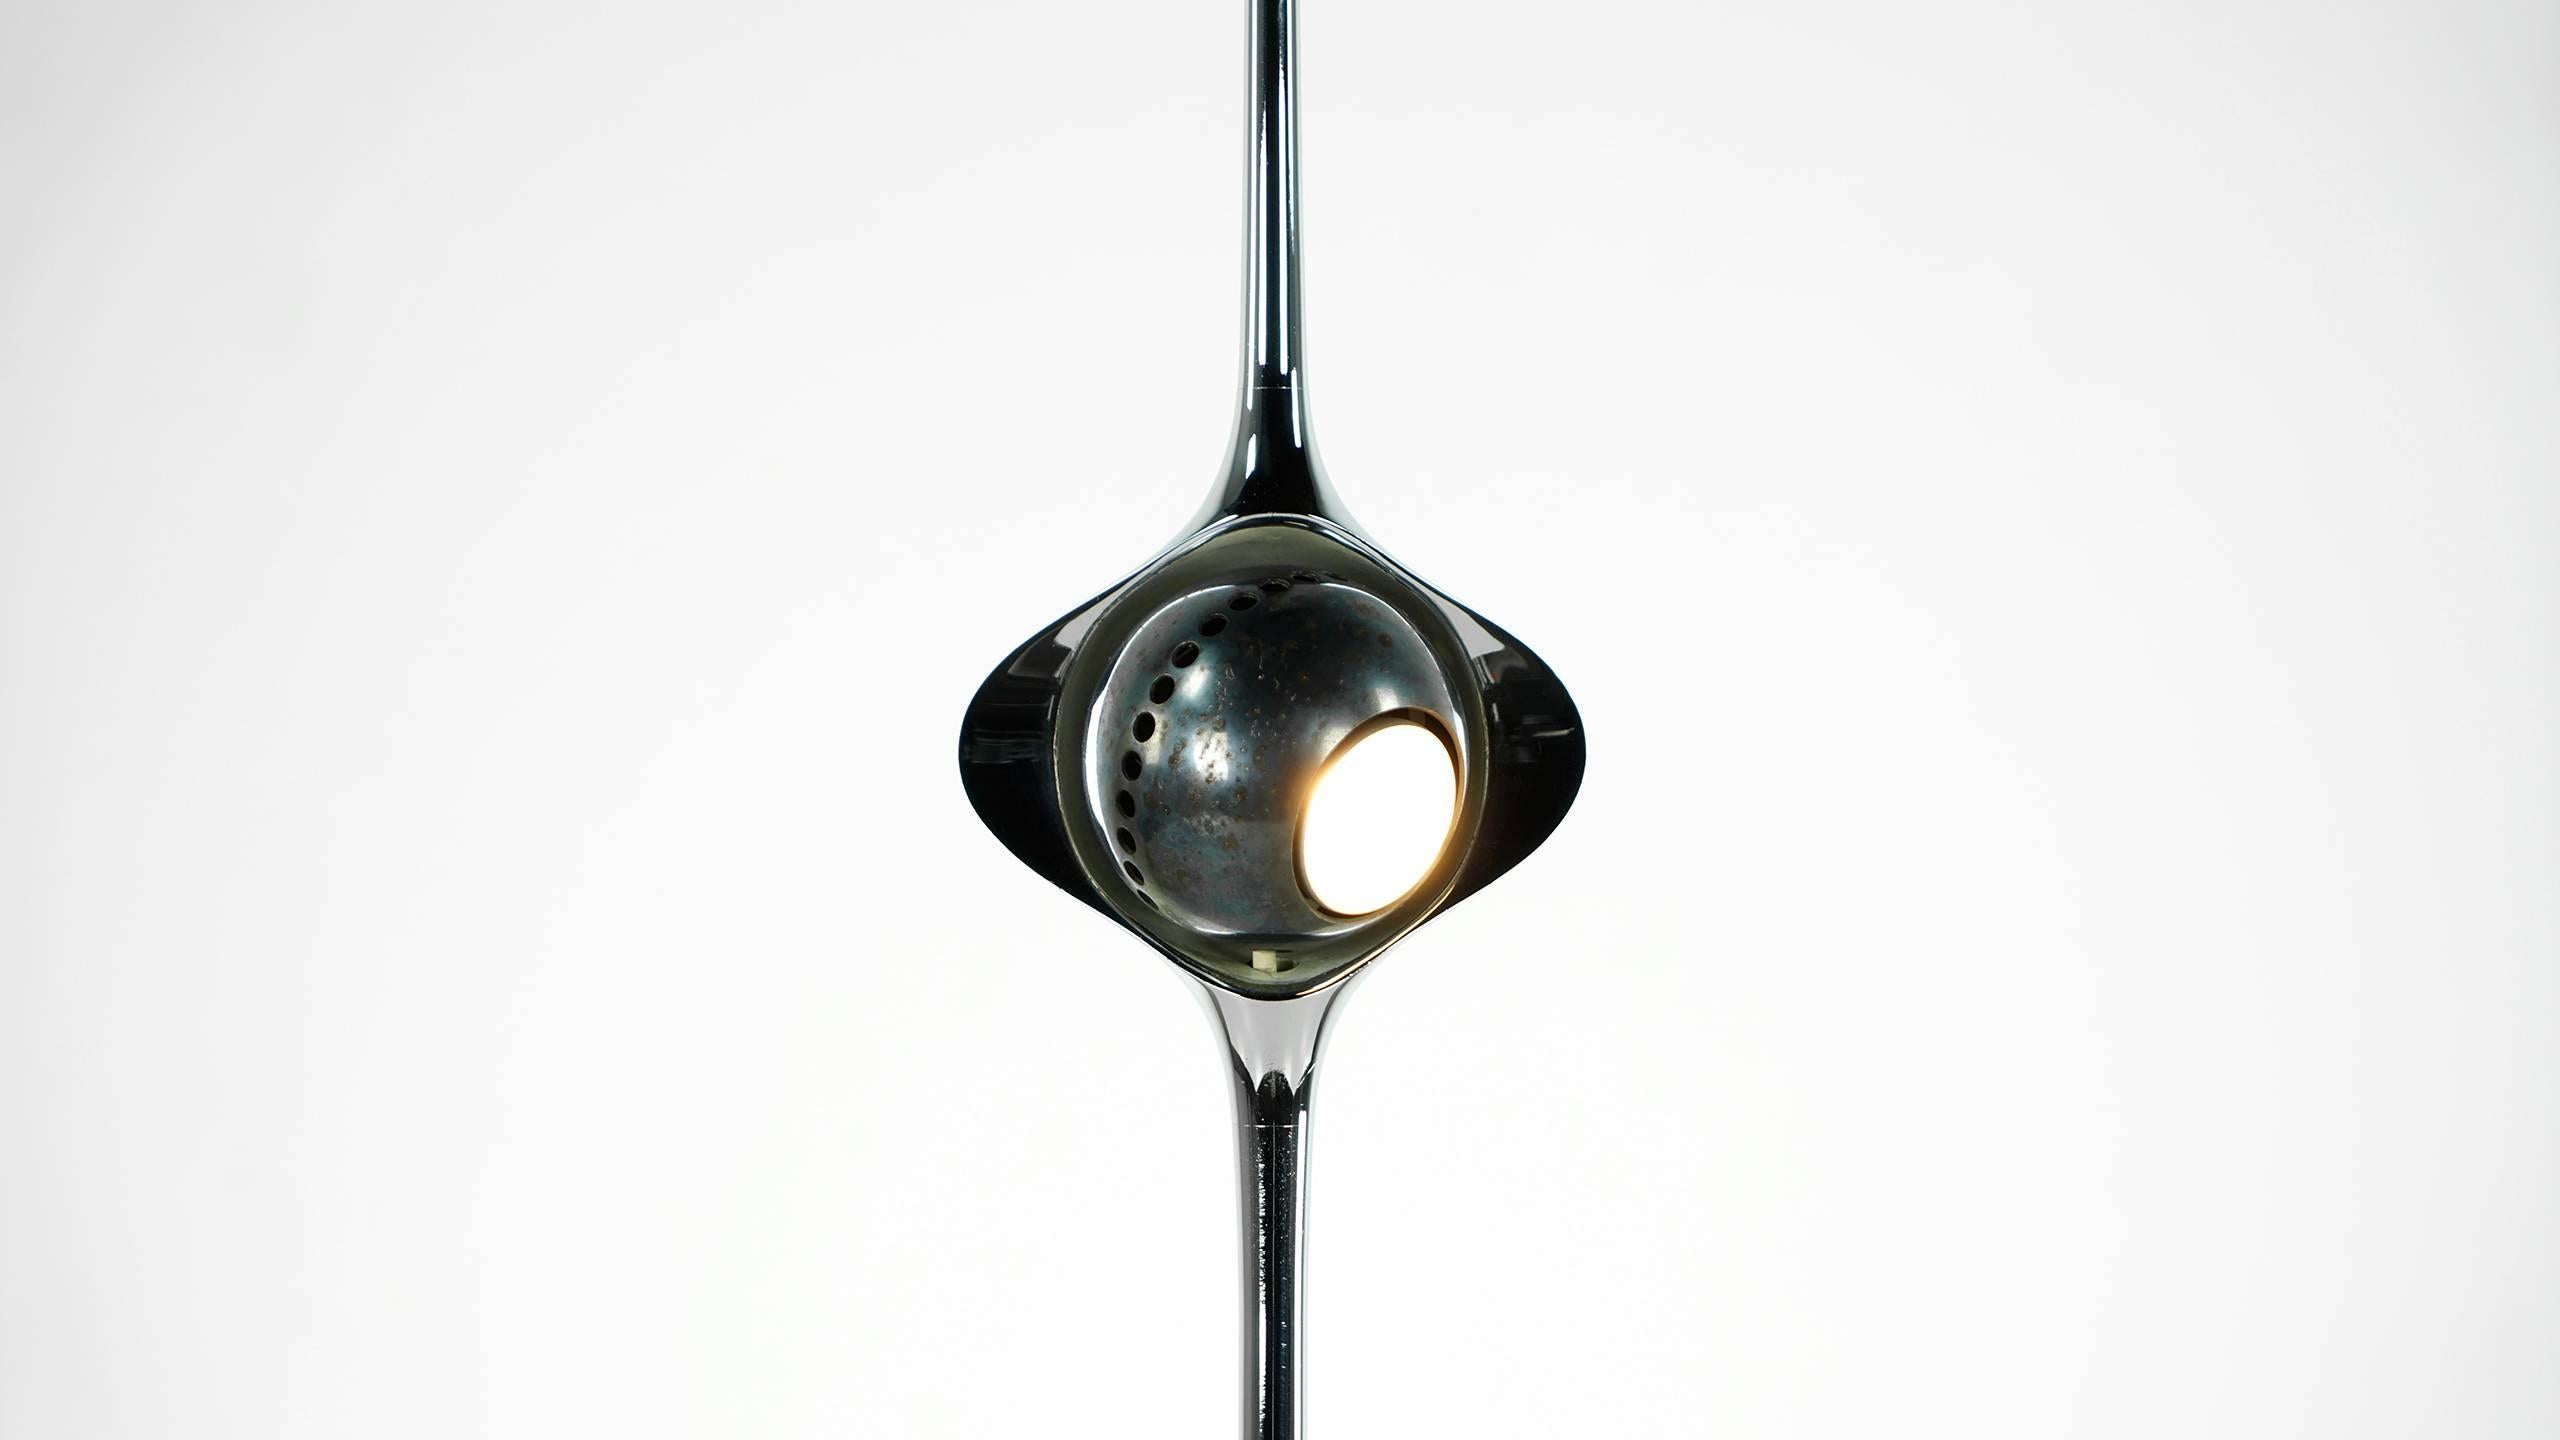 Chrome Angelo Lelli Cobra Light Sculpture, Lamp, 1964 by Arredoluce, 1st Edition